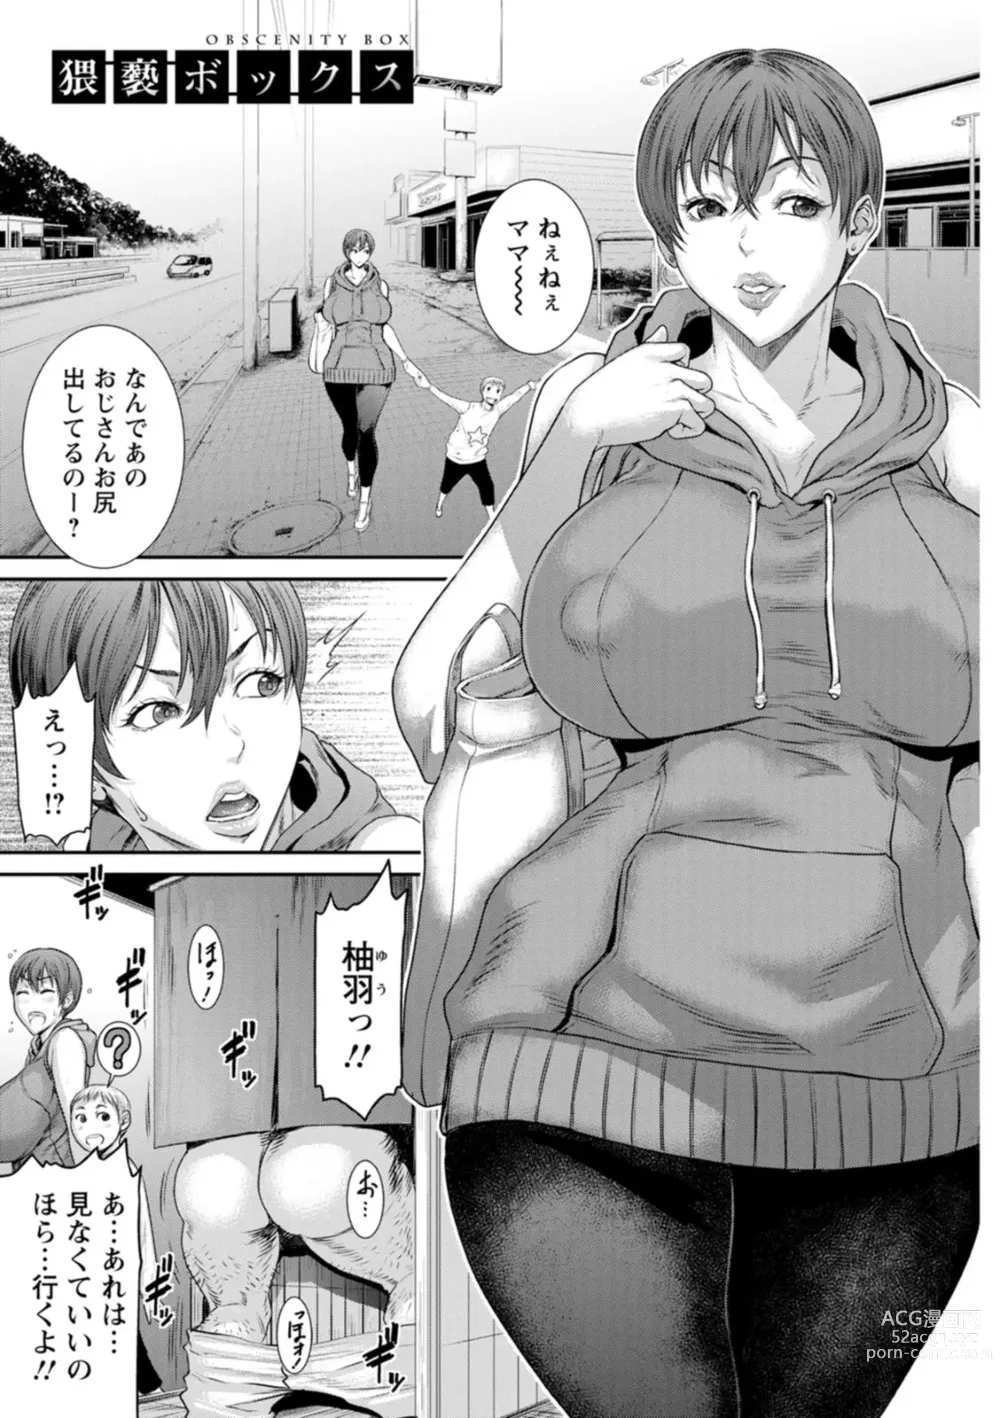 Page 7 of manga Obscene Box